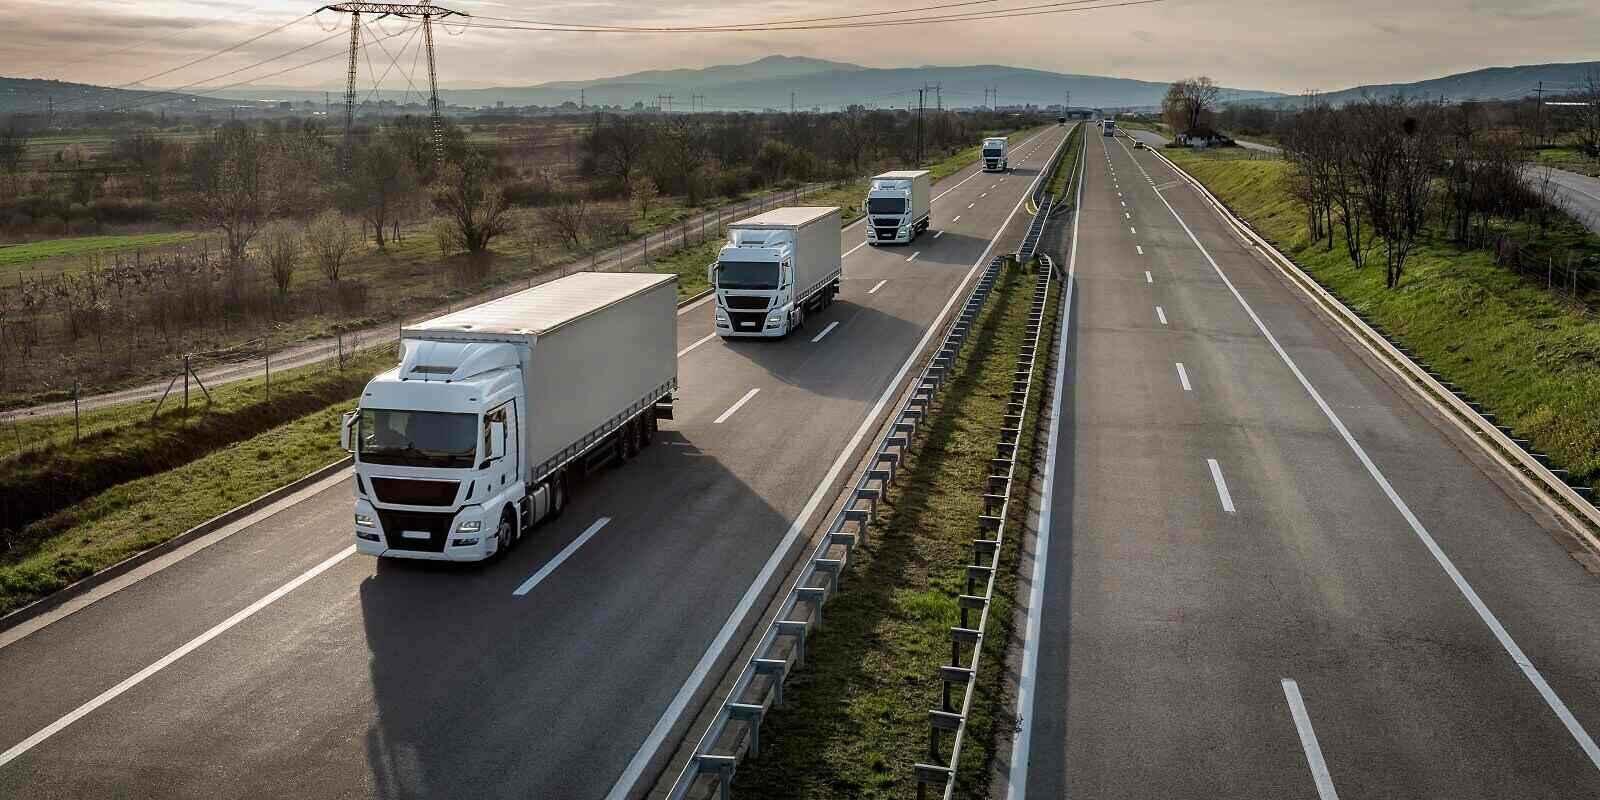 caravan or convoy of trucks in line on a country highway